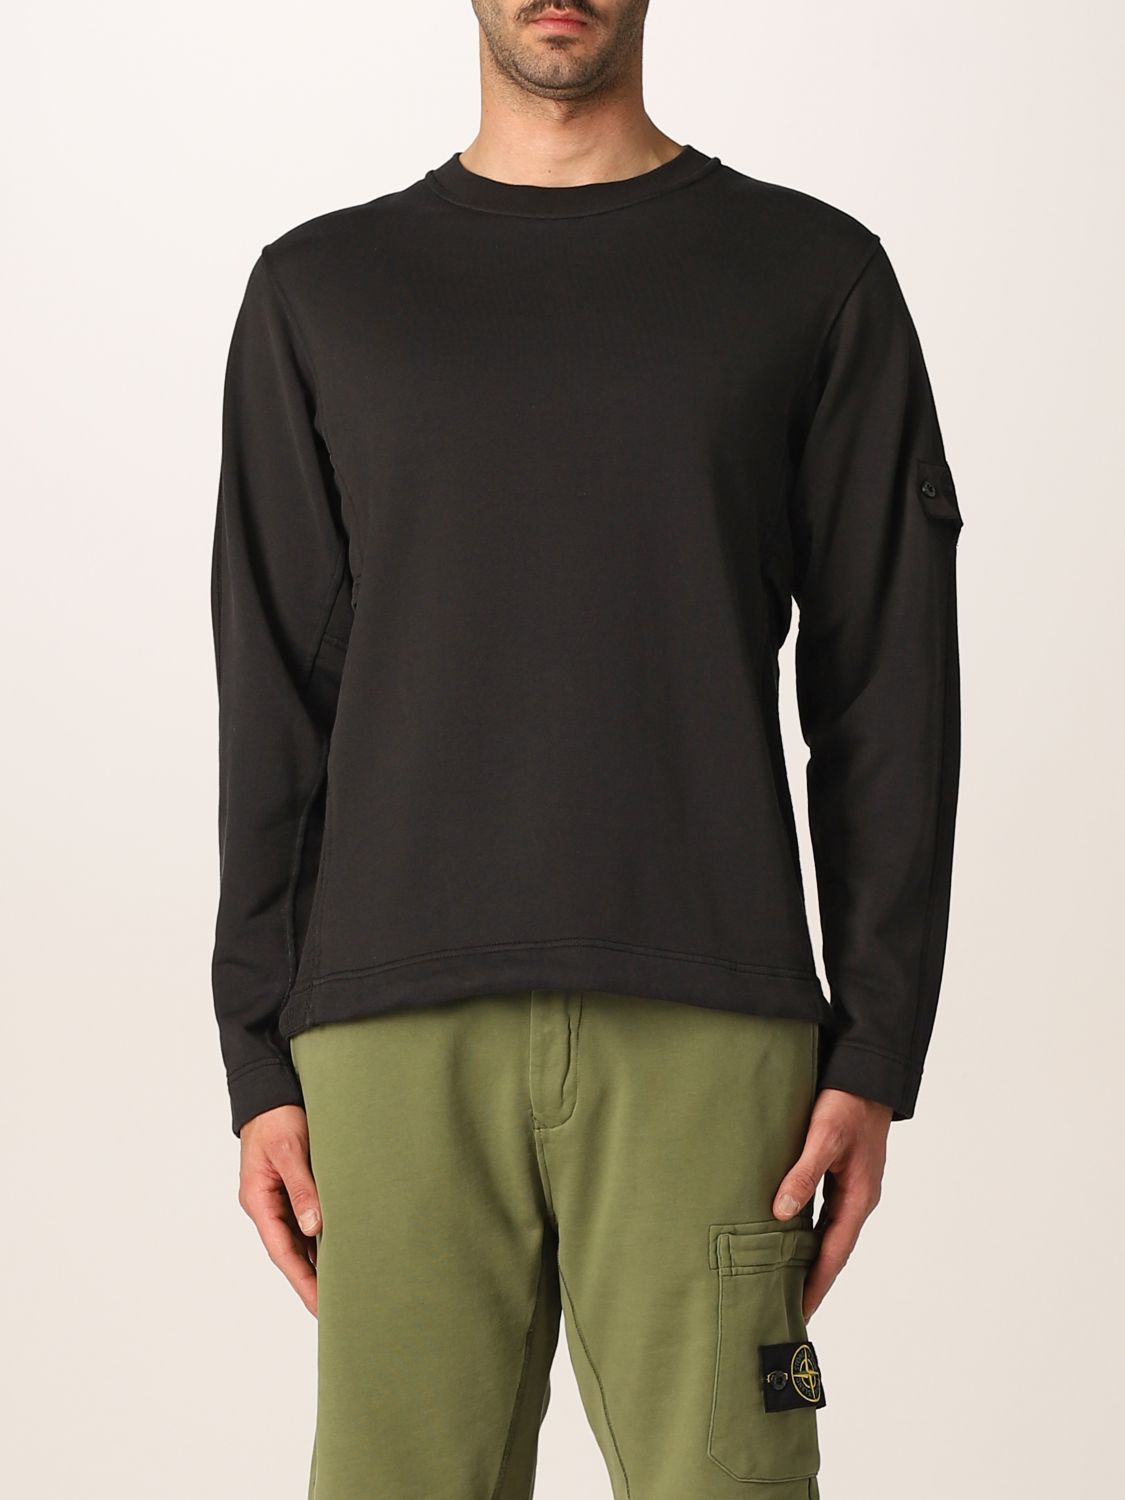 STONE ISLAND SHADOW PROJECT: cotton blend sweatshirt - Black | Stone ...